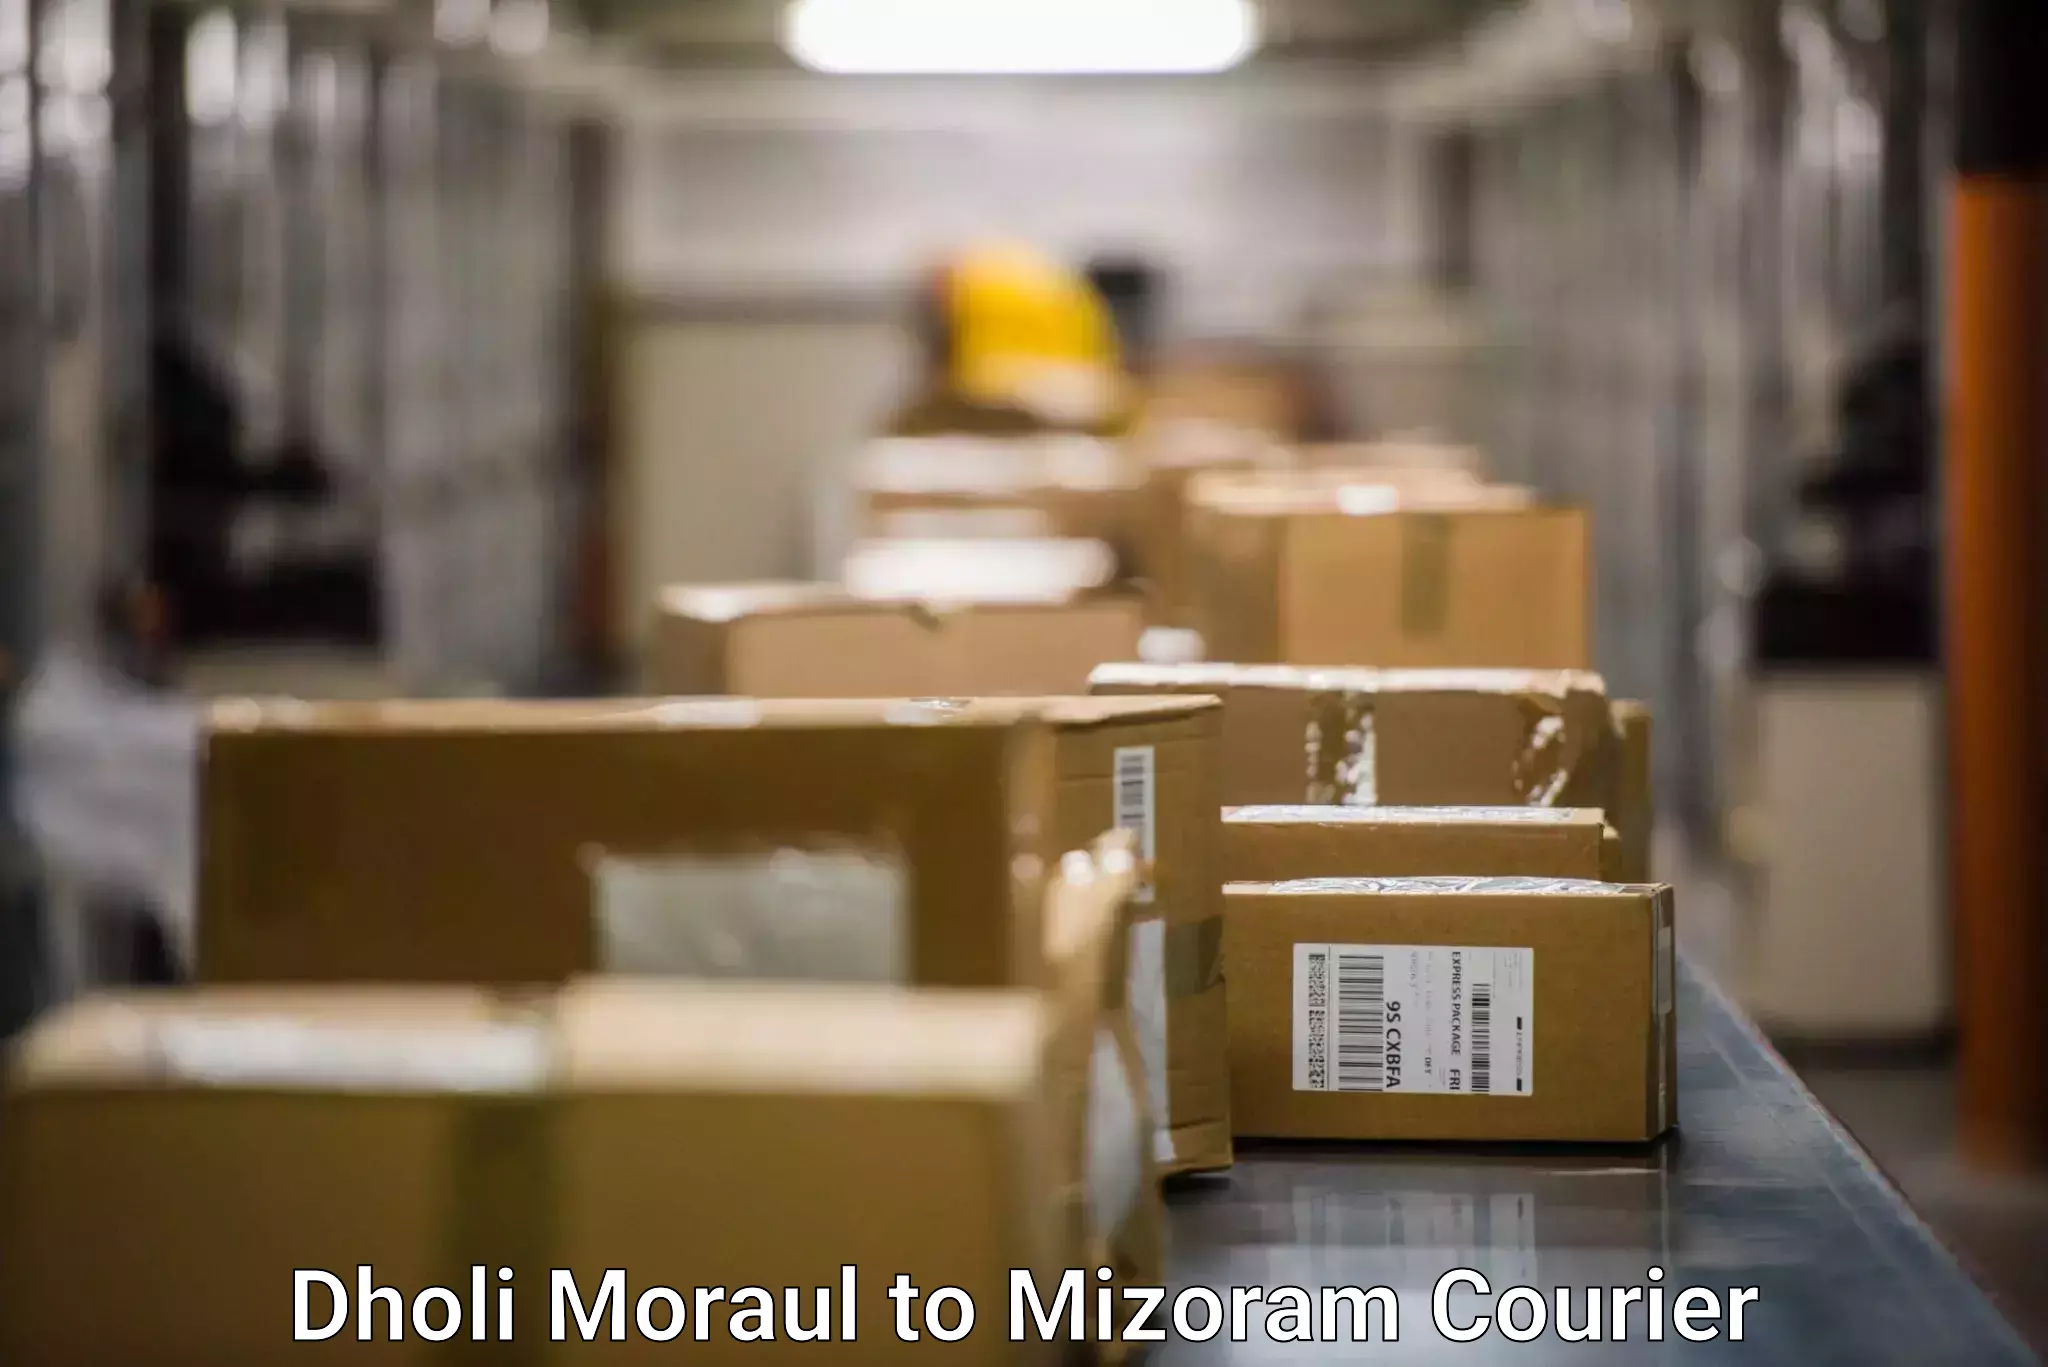 Professional courier handling Dholi Moraul to Mizoram